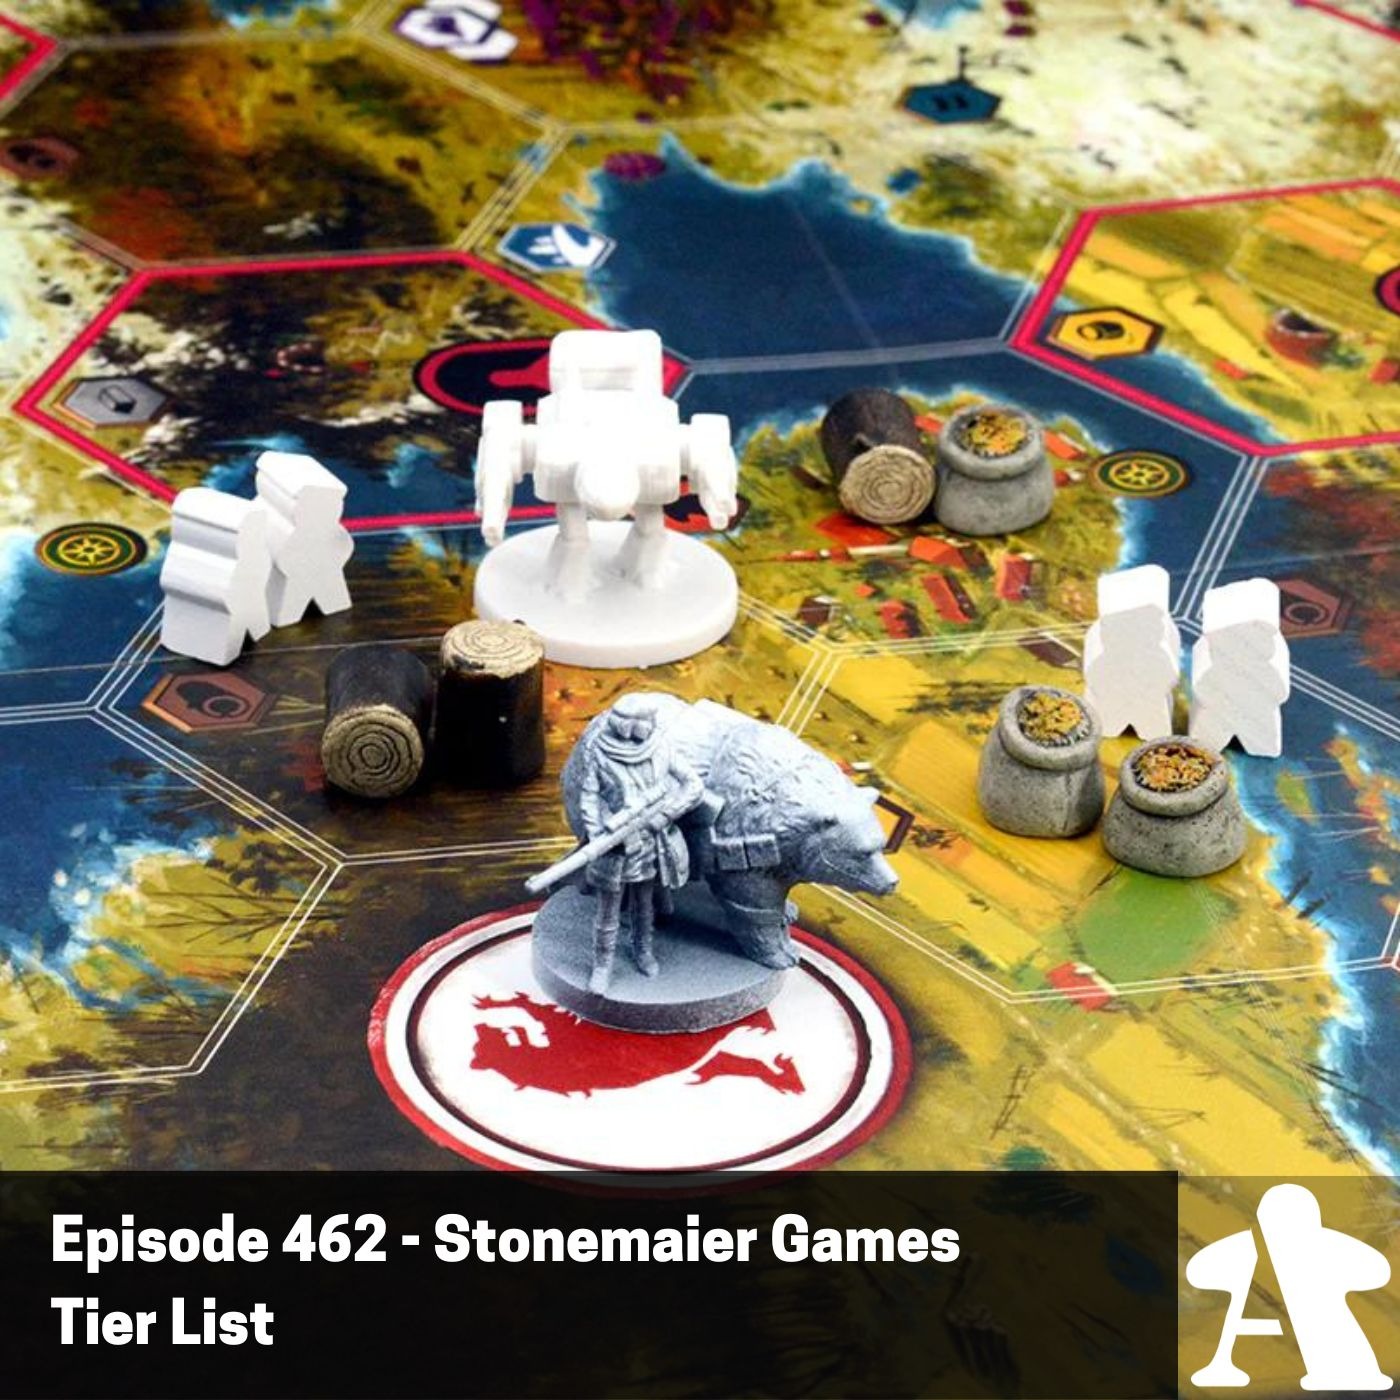 Episode 462 - Stonemaier Games Tier List